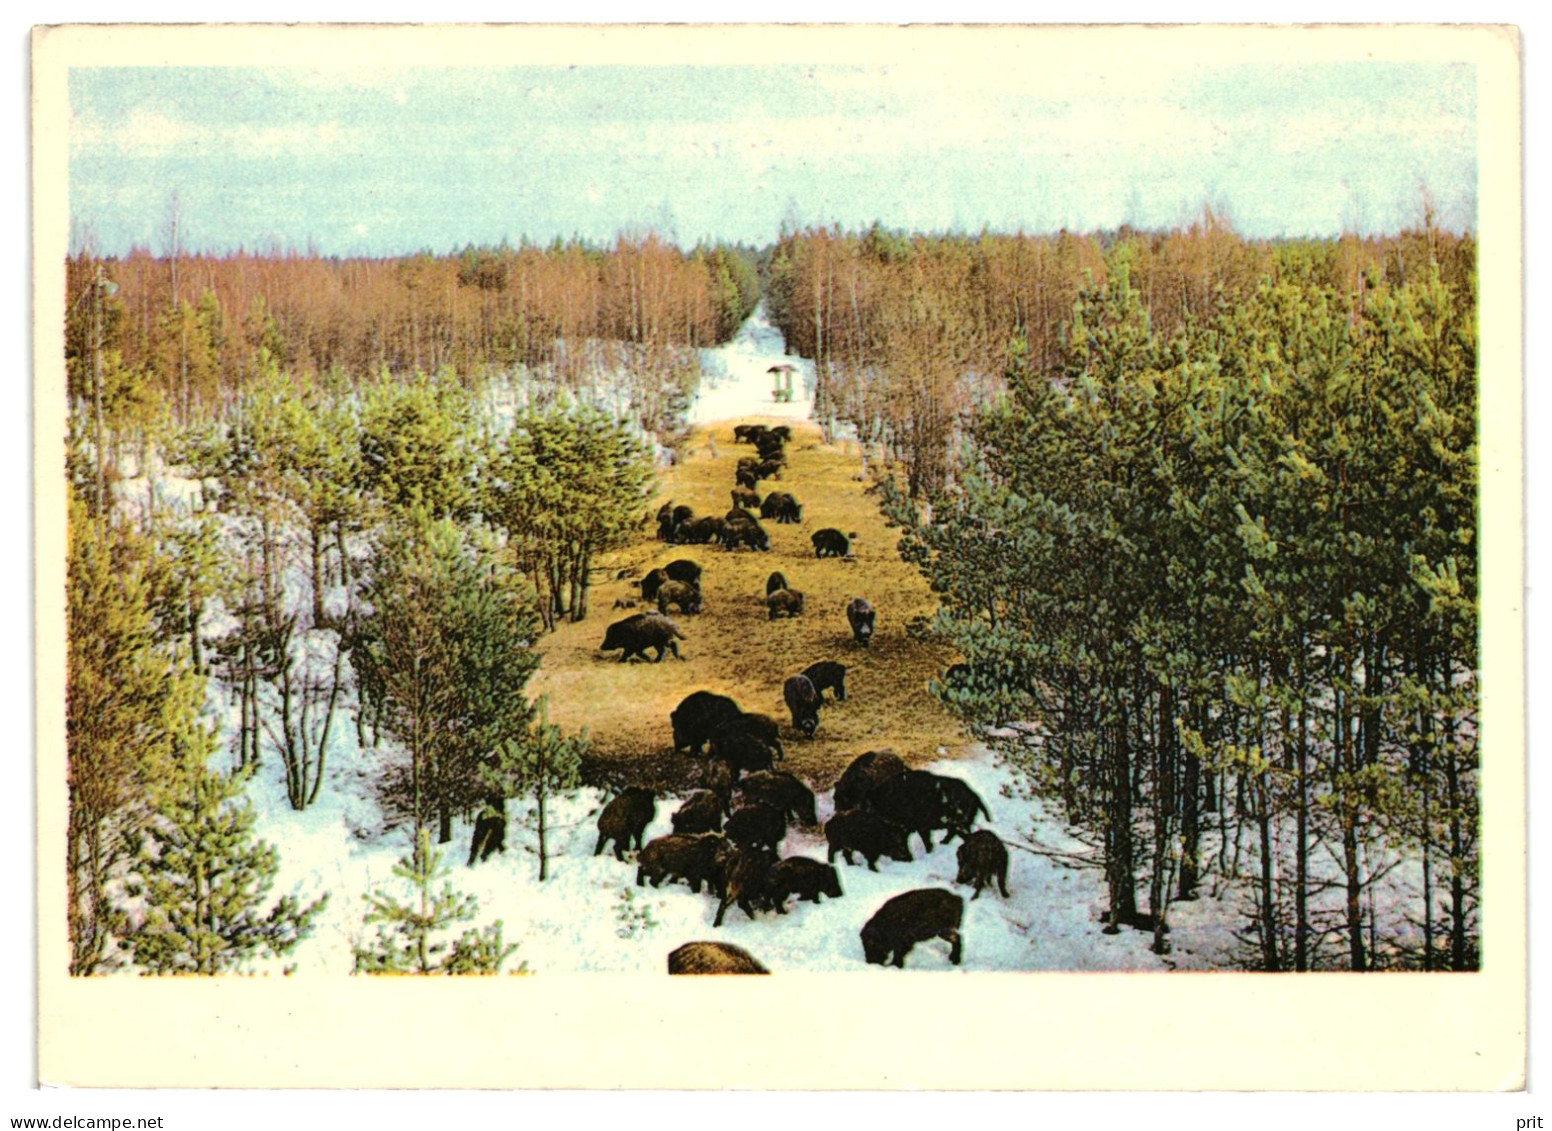 The Herd Of Wild Boars, Pigs, Winter Snow. Unused Postcard. Publisher Eesti Raamat, Tallinn Estonia 1983 - Pigs